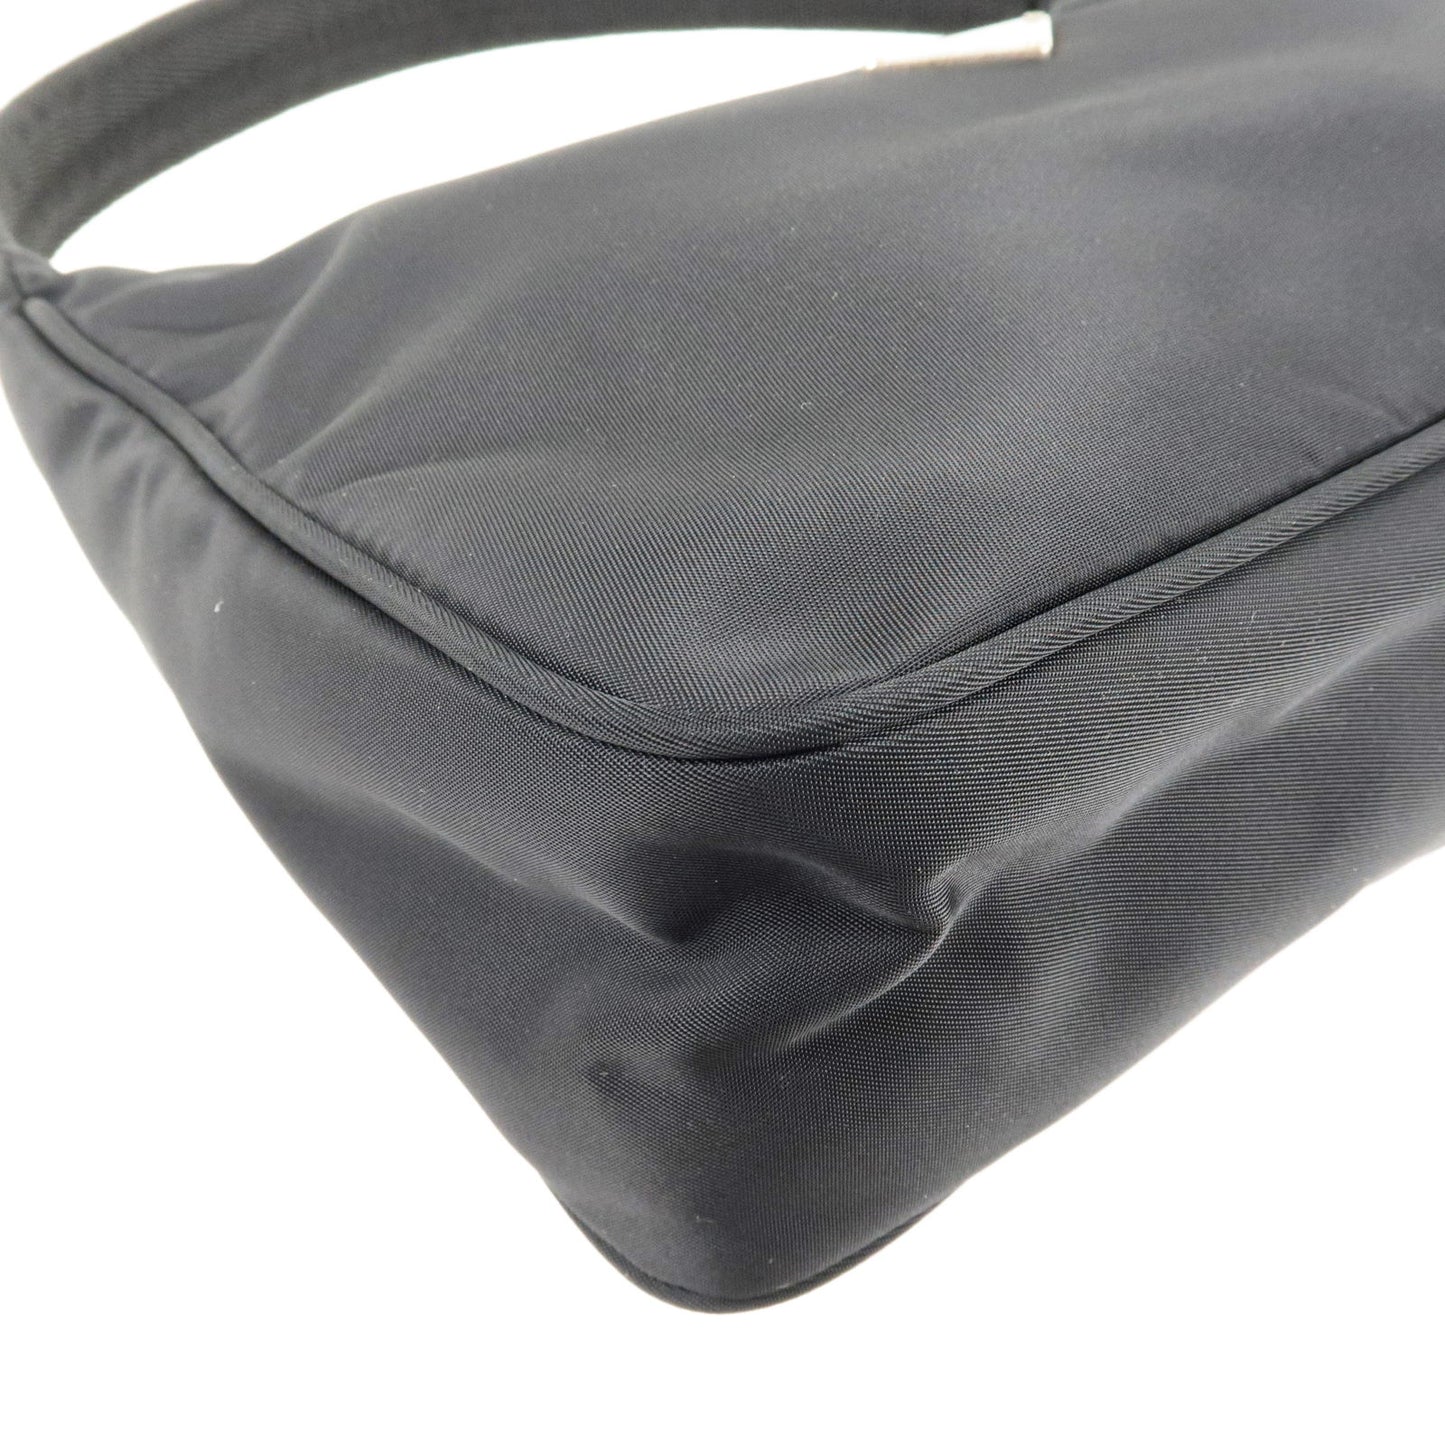 PRADA Logo Nylon Hand Bag Pouch Purse Black MV515